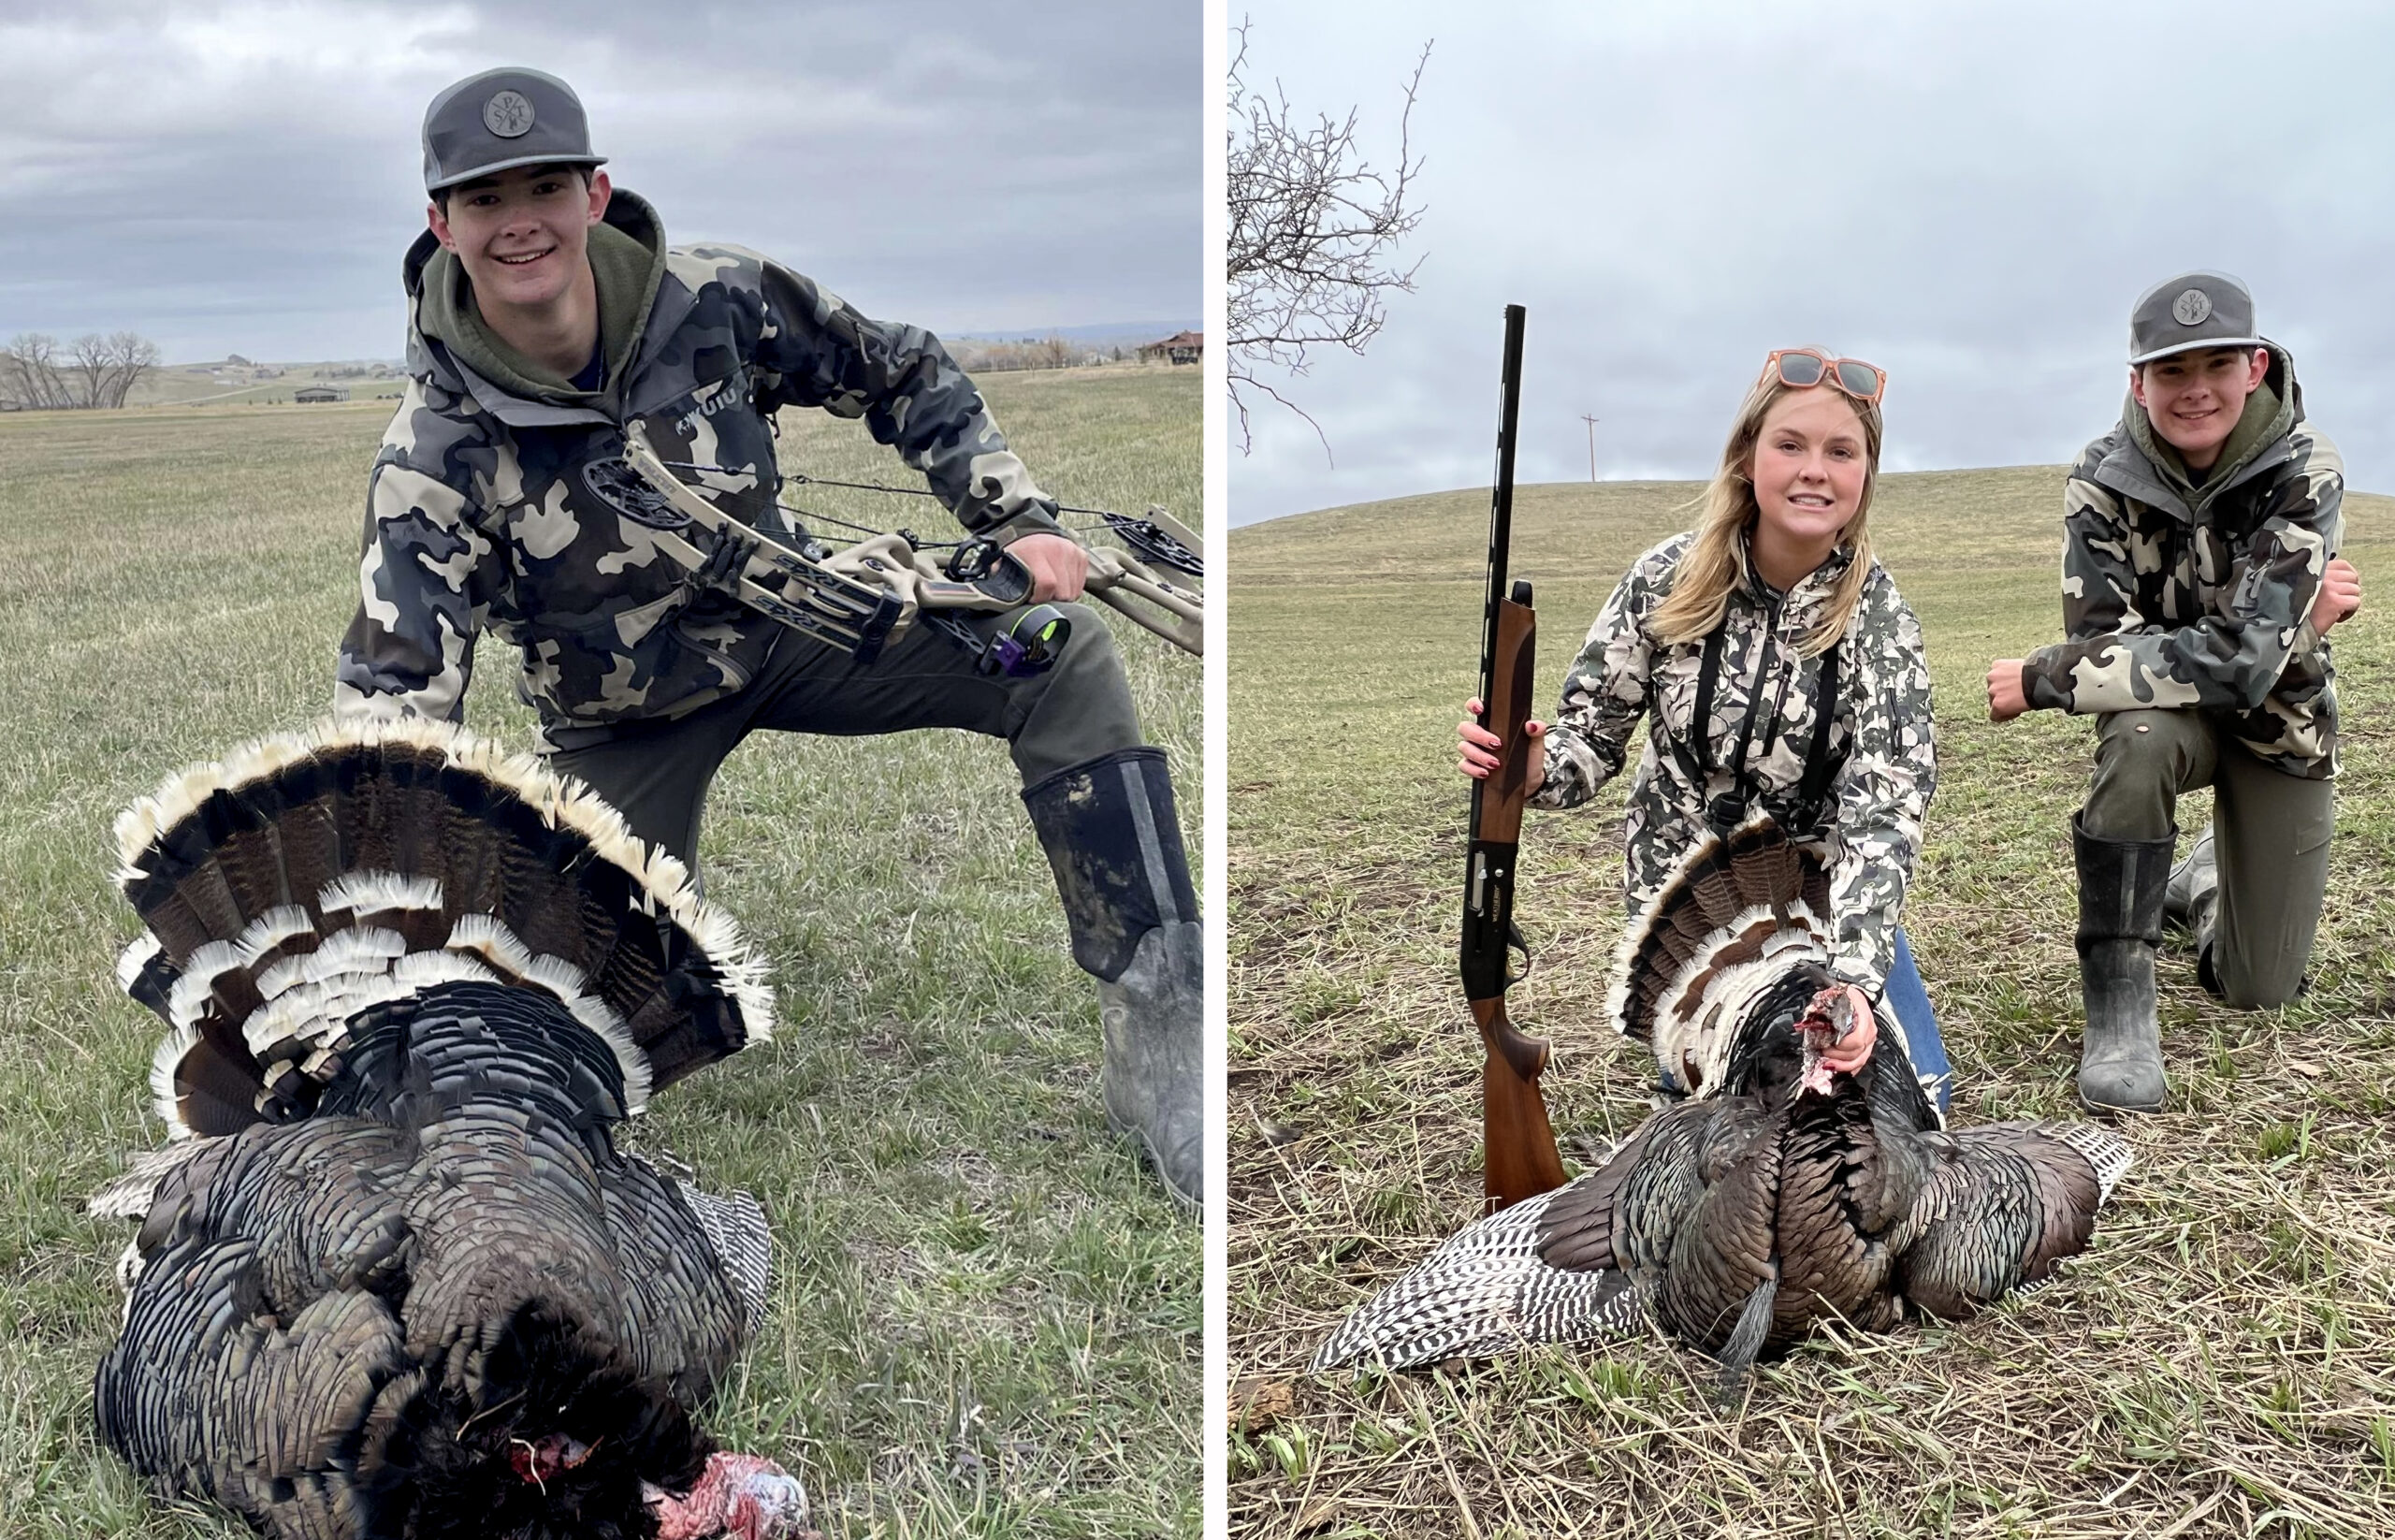 Wyoming hunting buddies with their Merriams turkeys.